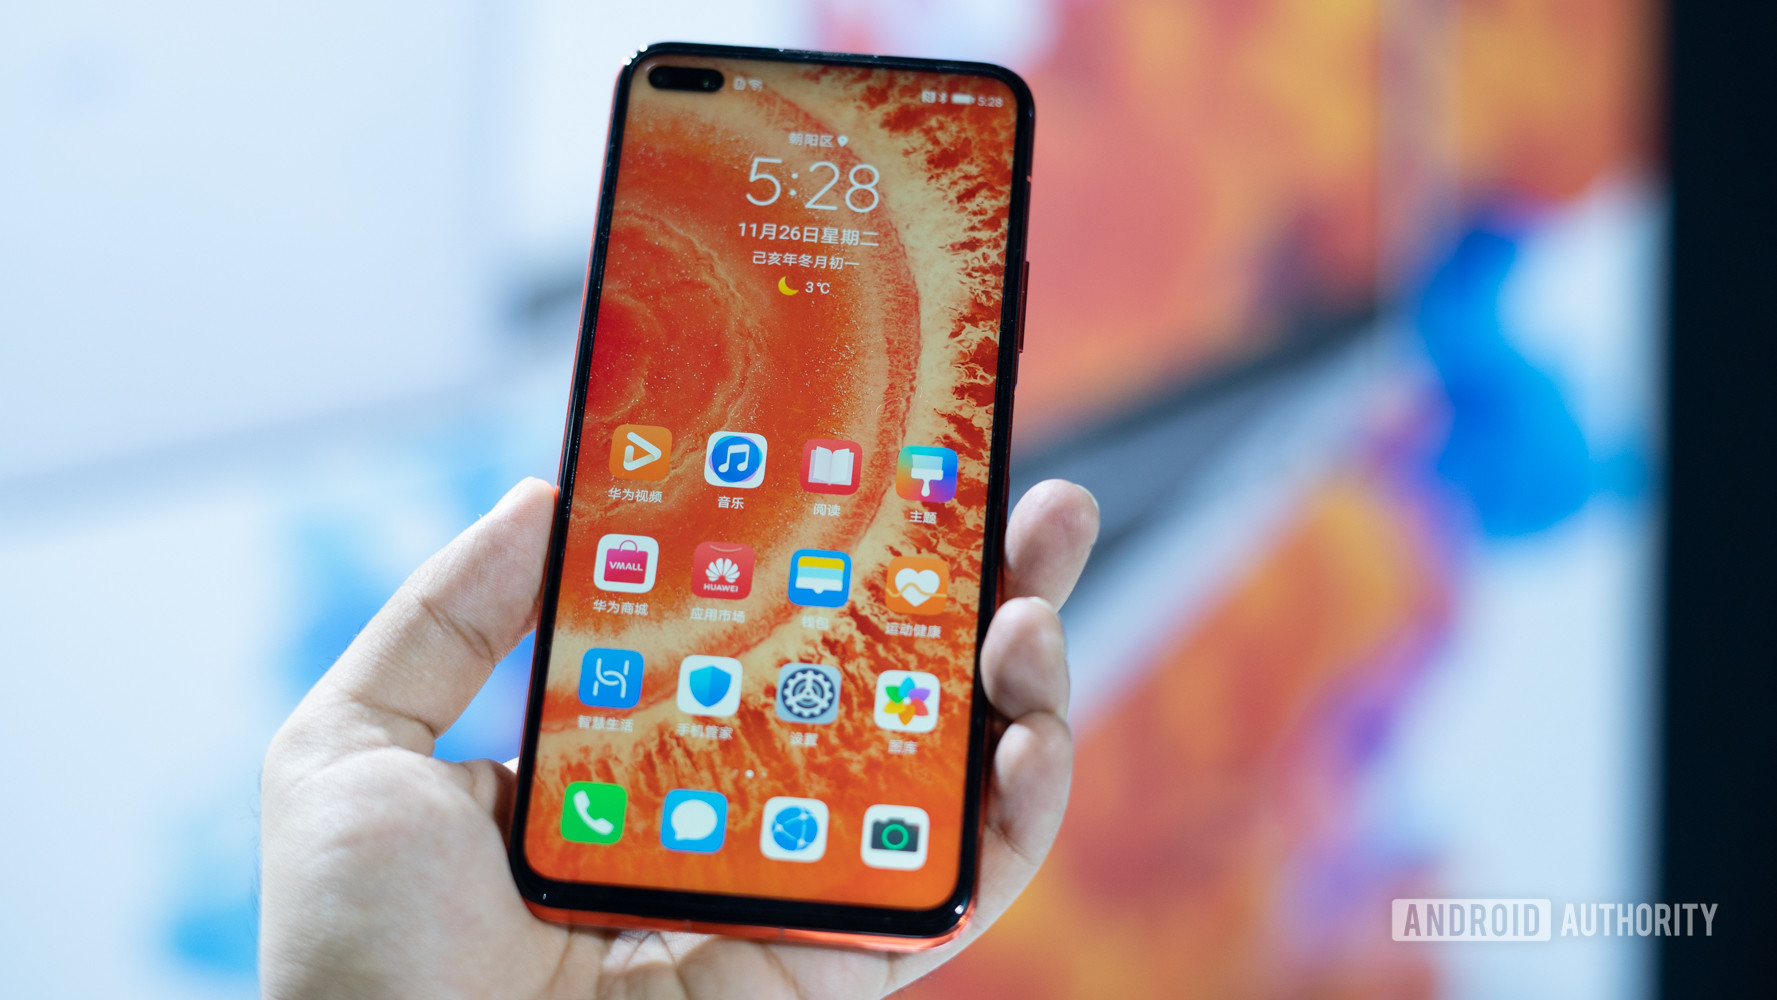 Latest Model Huawei New Phone 2018